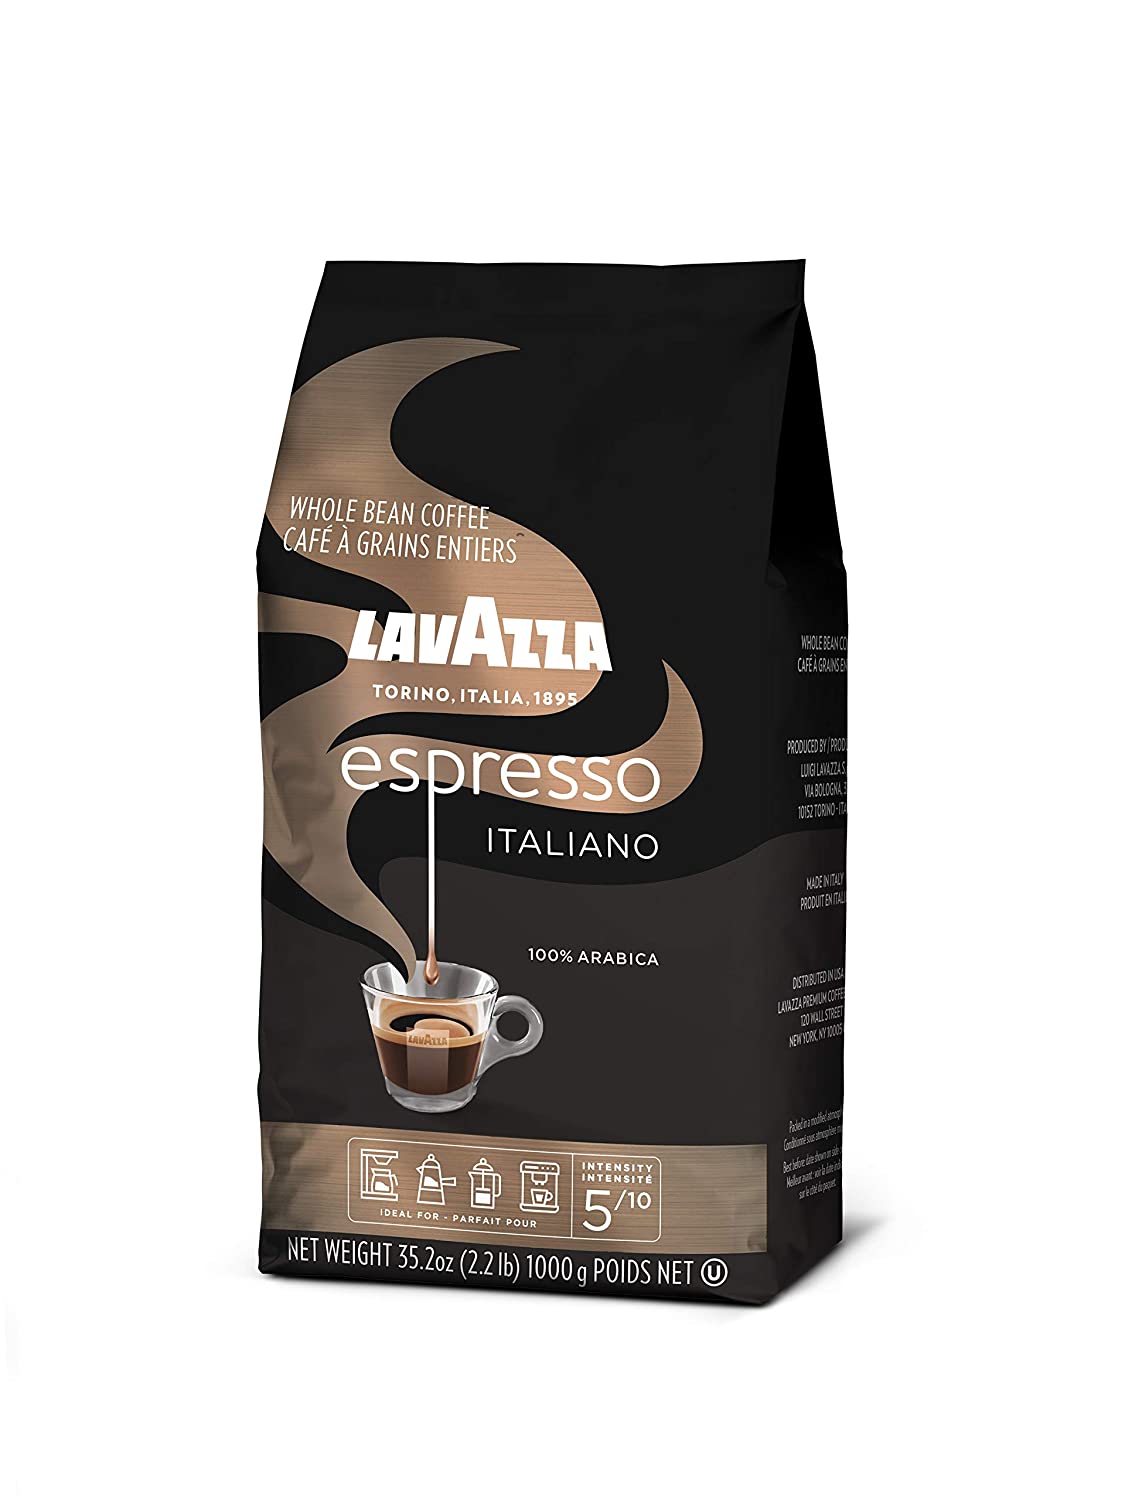 2.2-Lb Lavazza Espresso Italiano Whole Bean Coffee Blend (Medium Roast) $9.47+ Free Shipping w/ Prime or on $25+